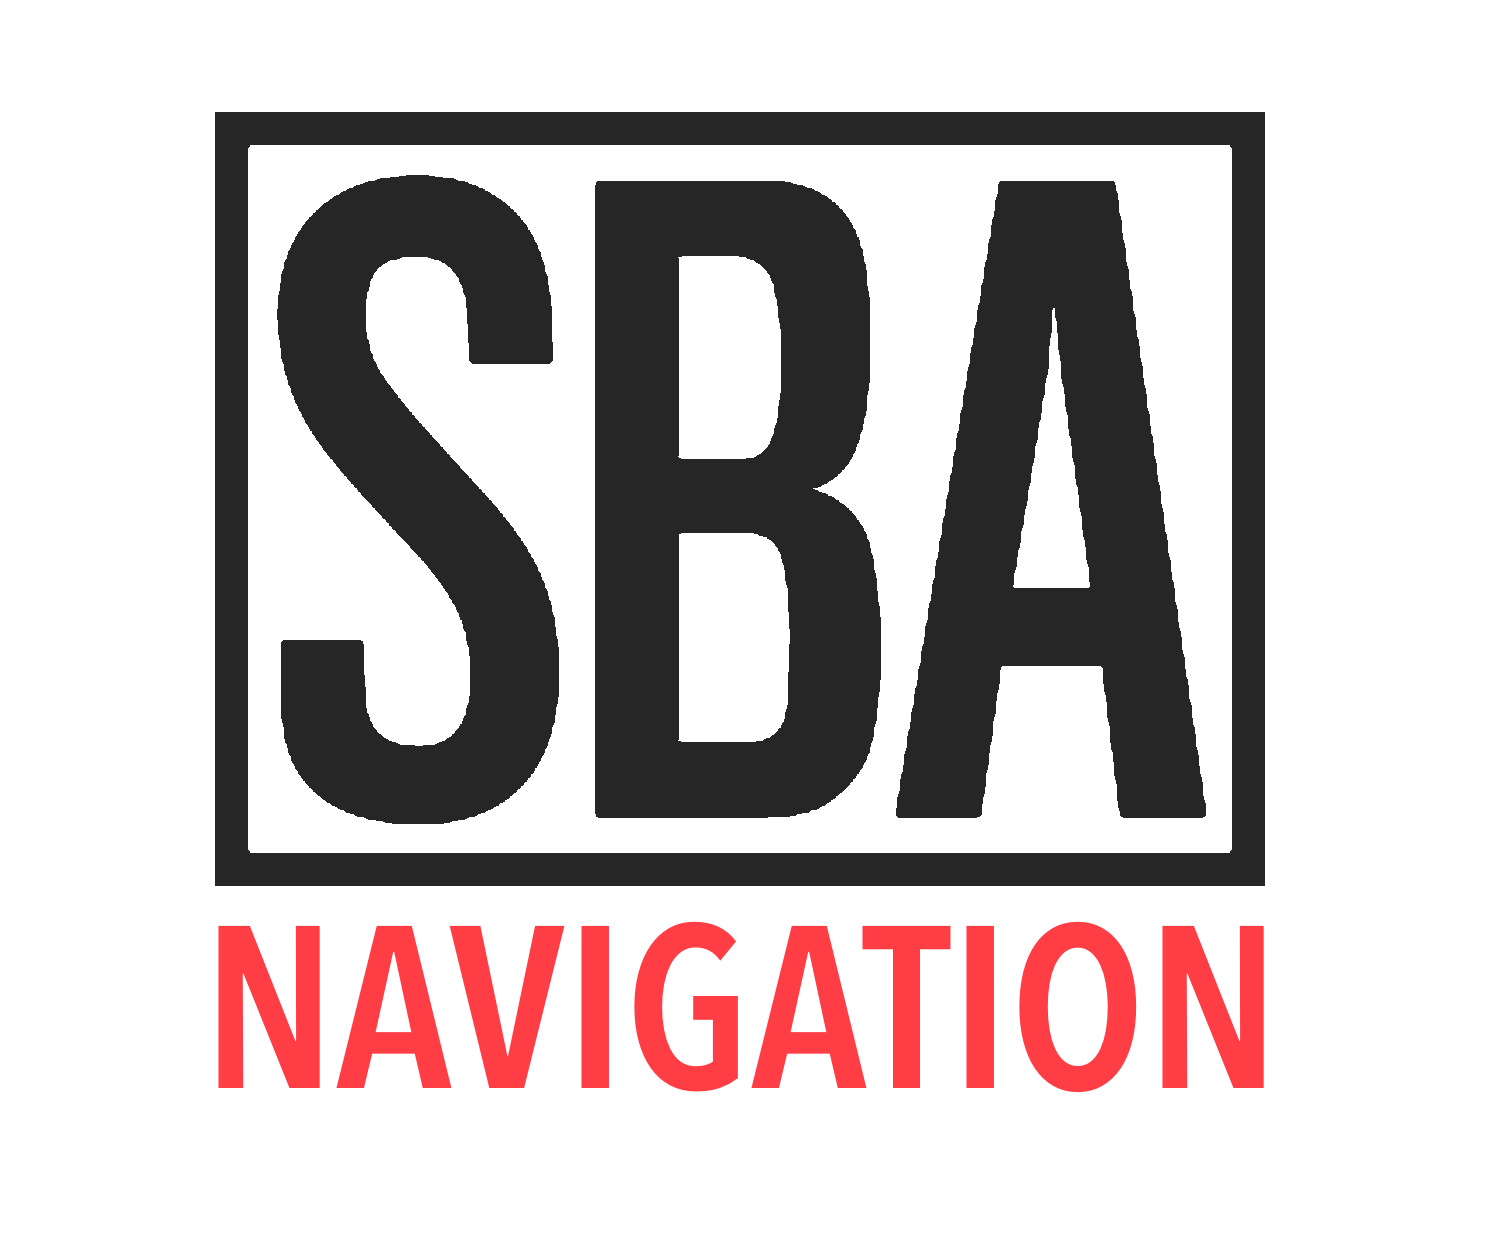 Materials – SBA Navigation